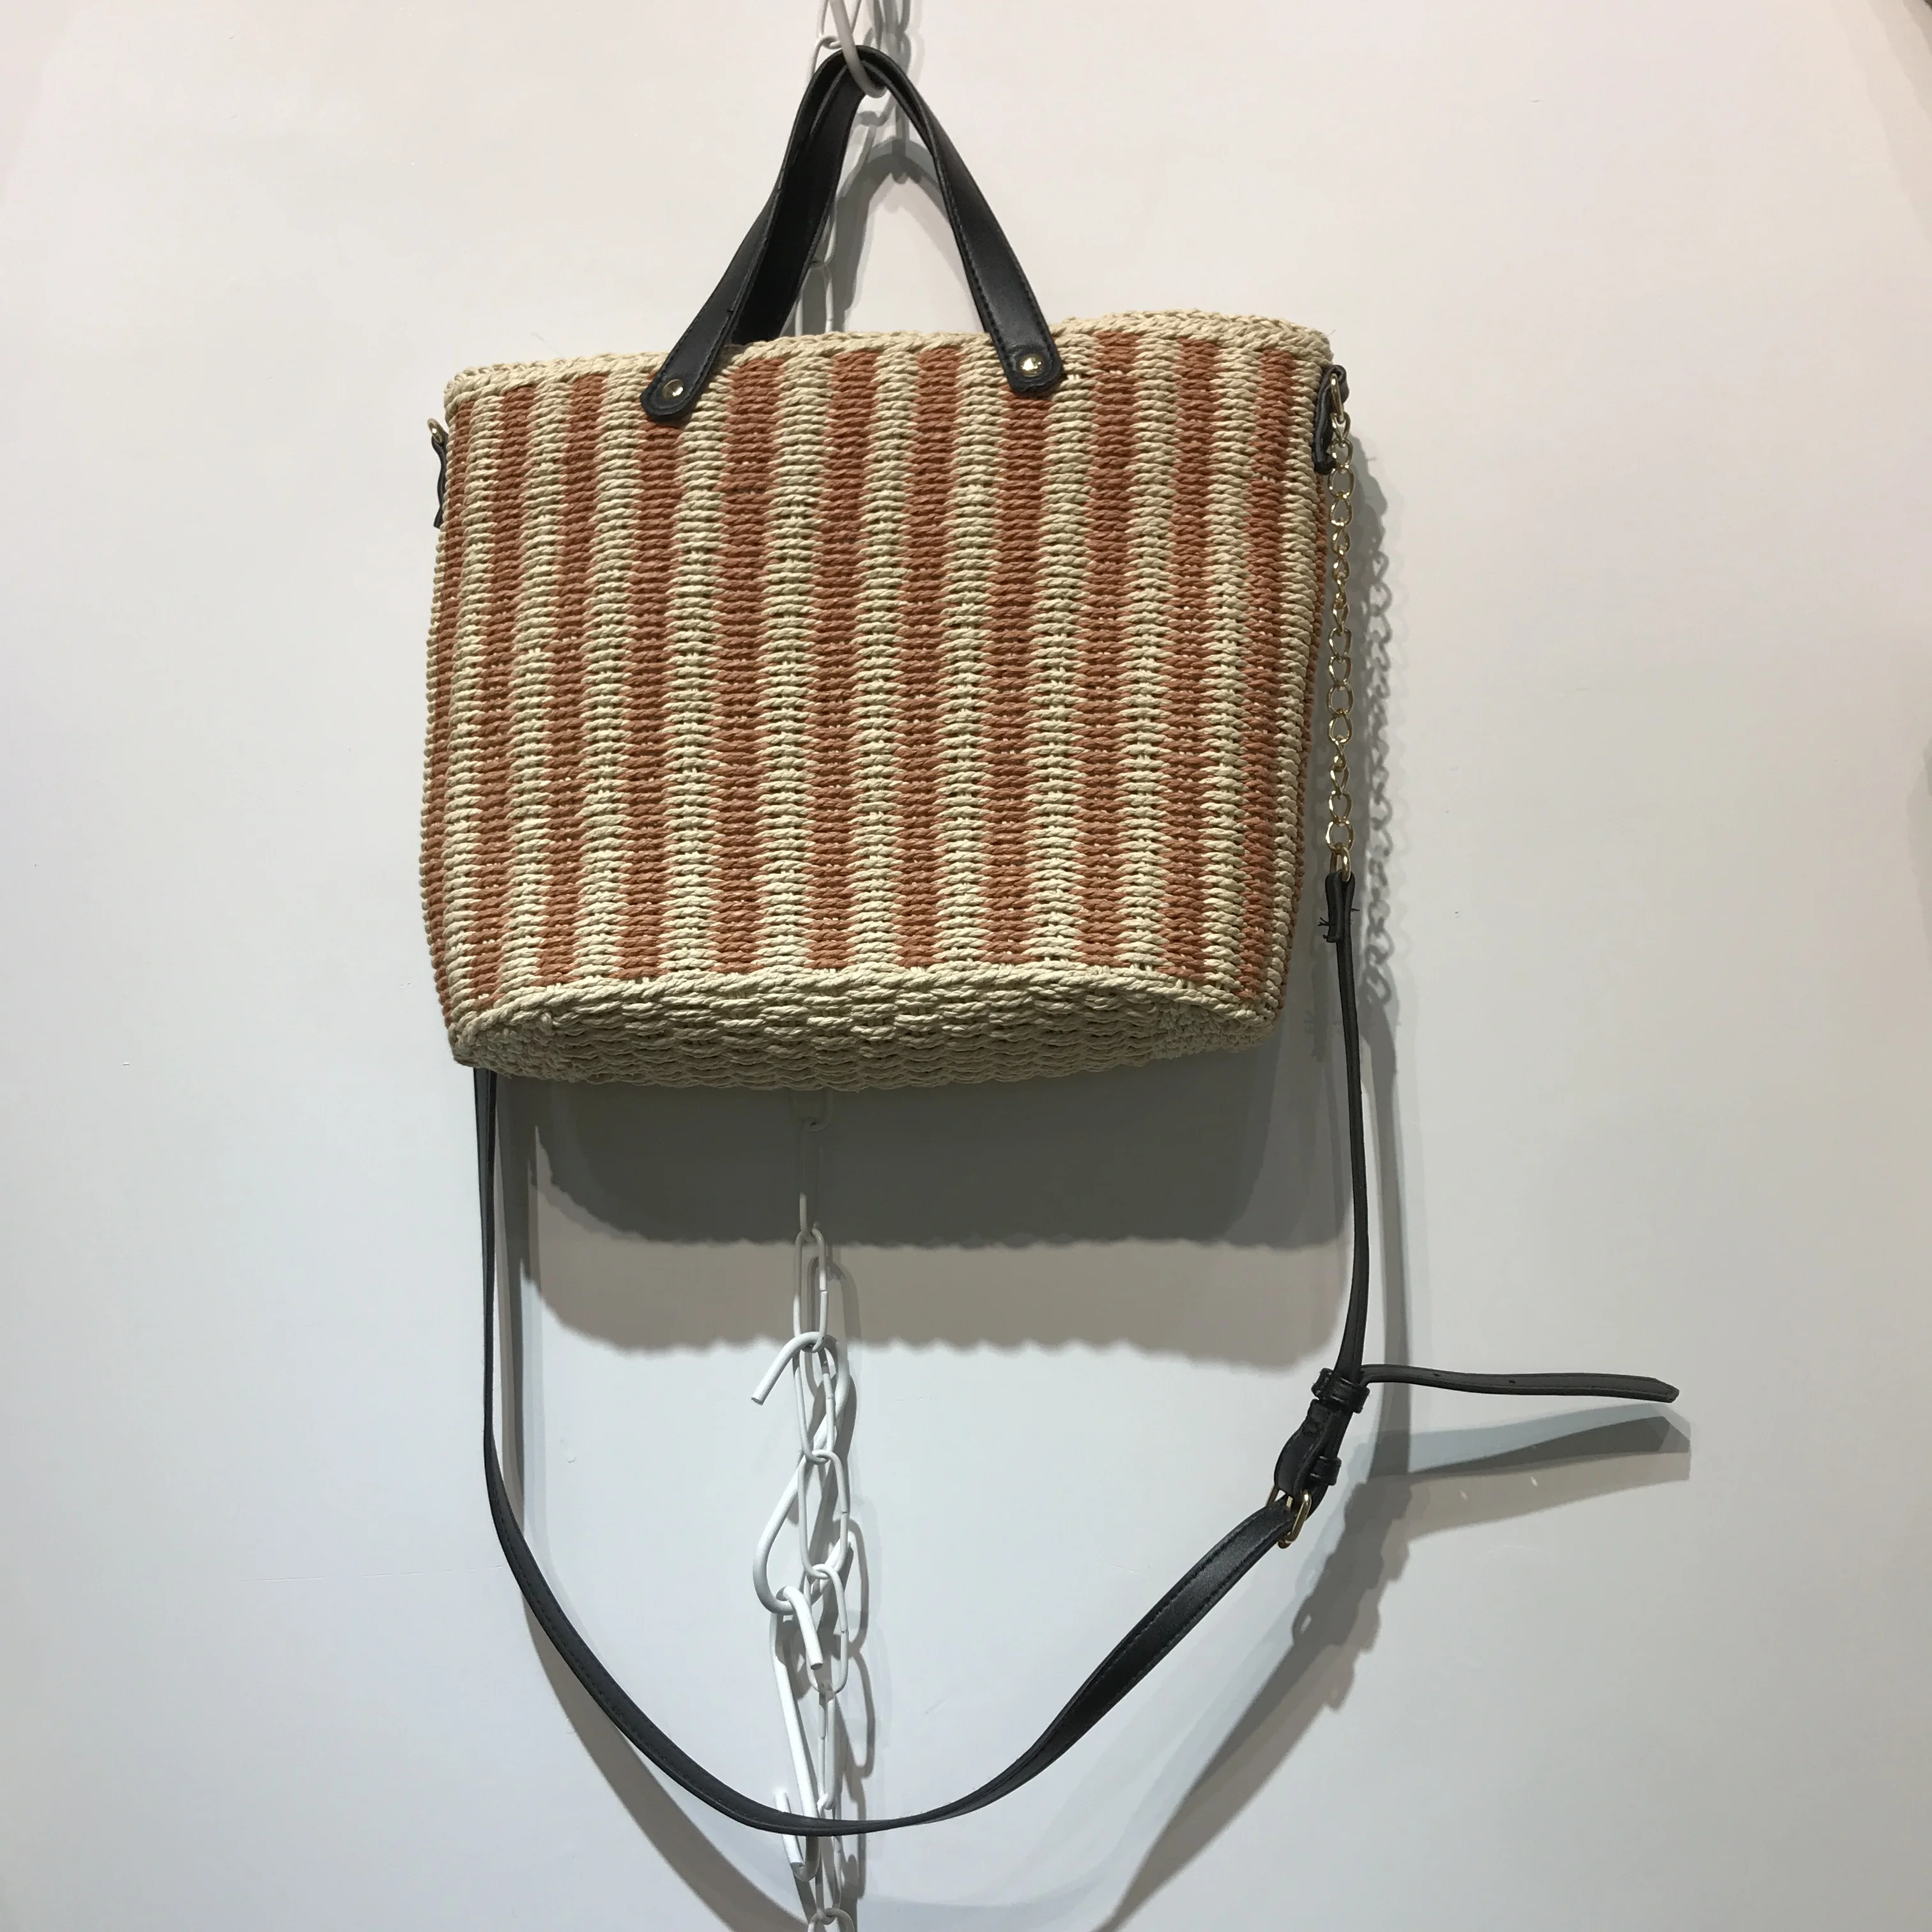 Straw Bag 2022 Women's Large Capacity Basket Woven Bag Portable Tote Beach Bag for Ladies